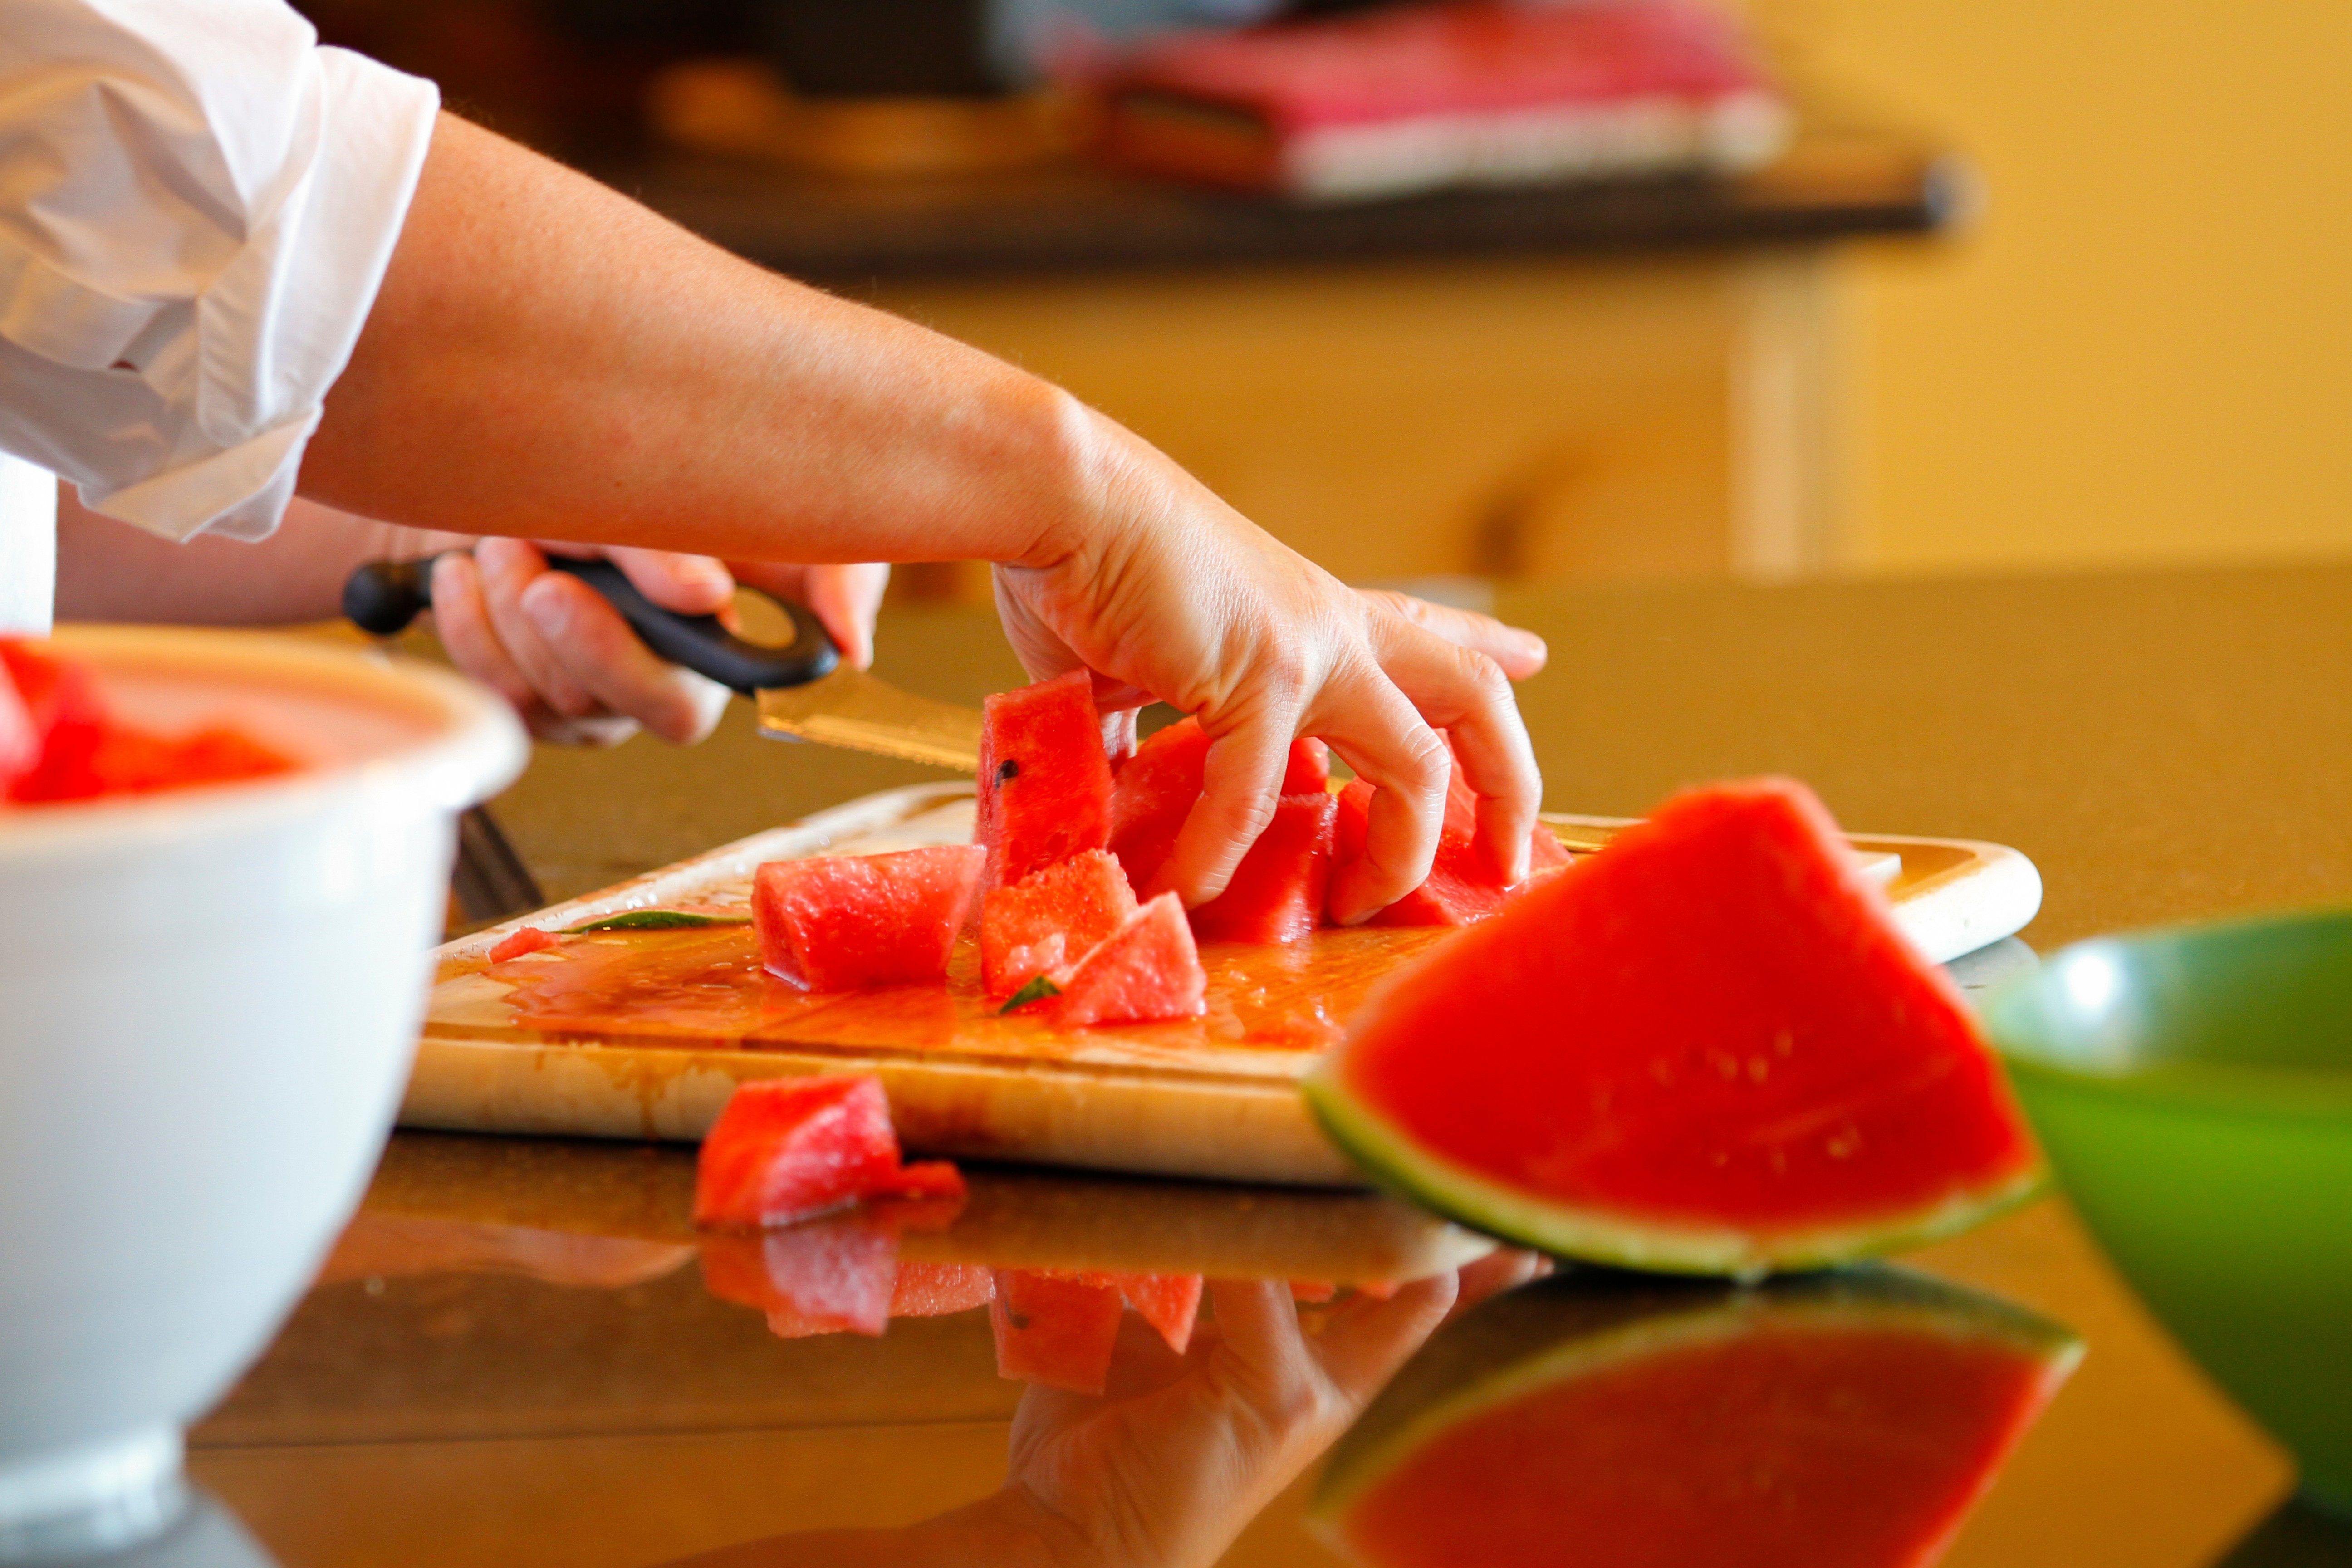 A food preparer slicing watermelon.  